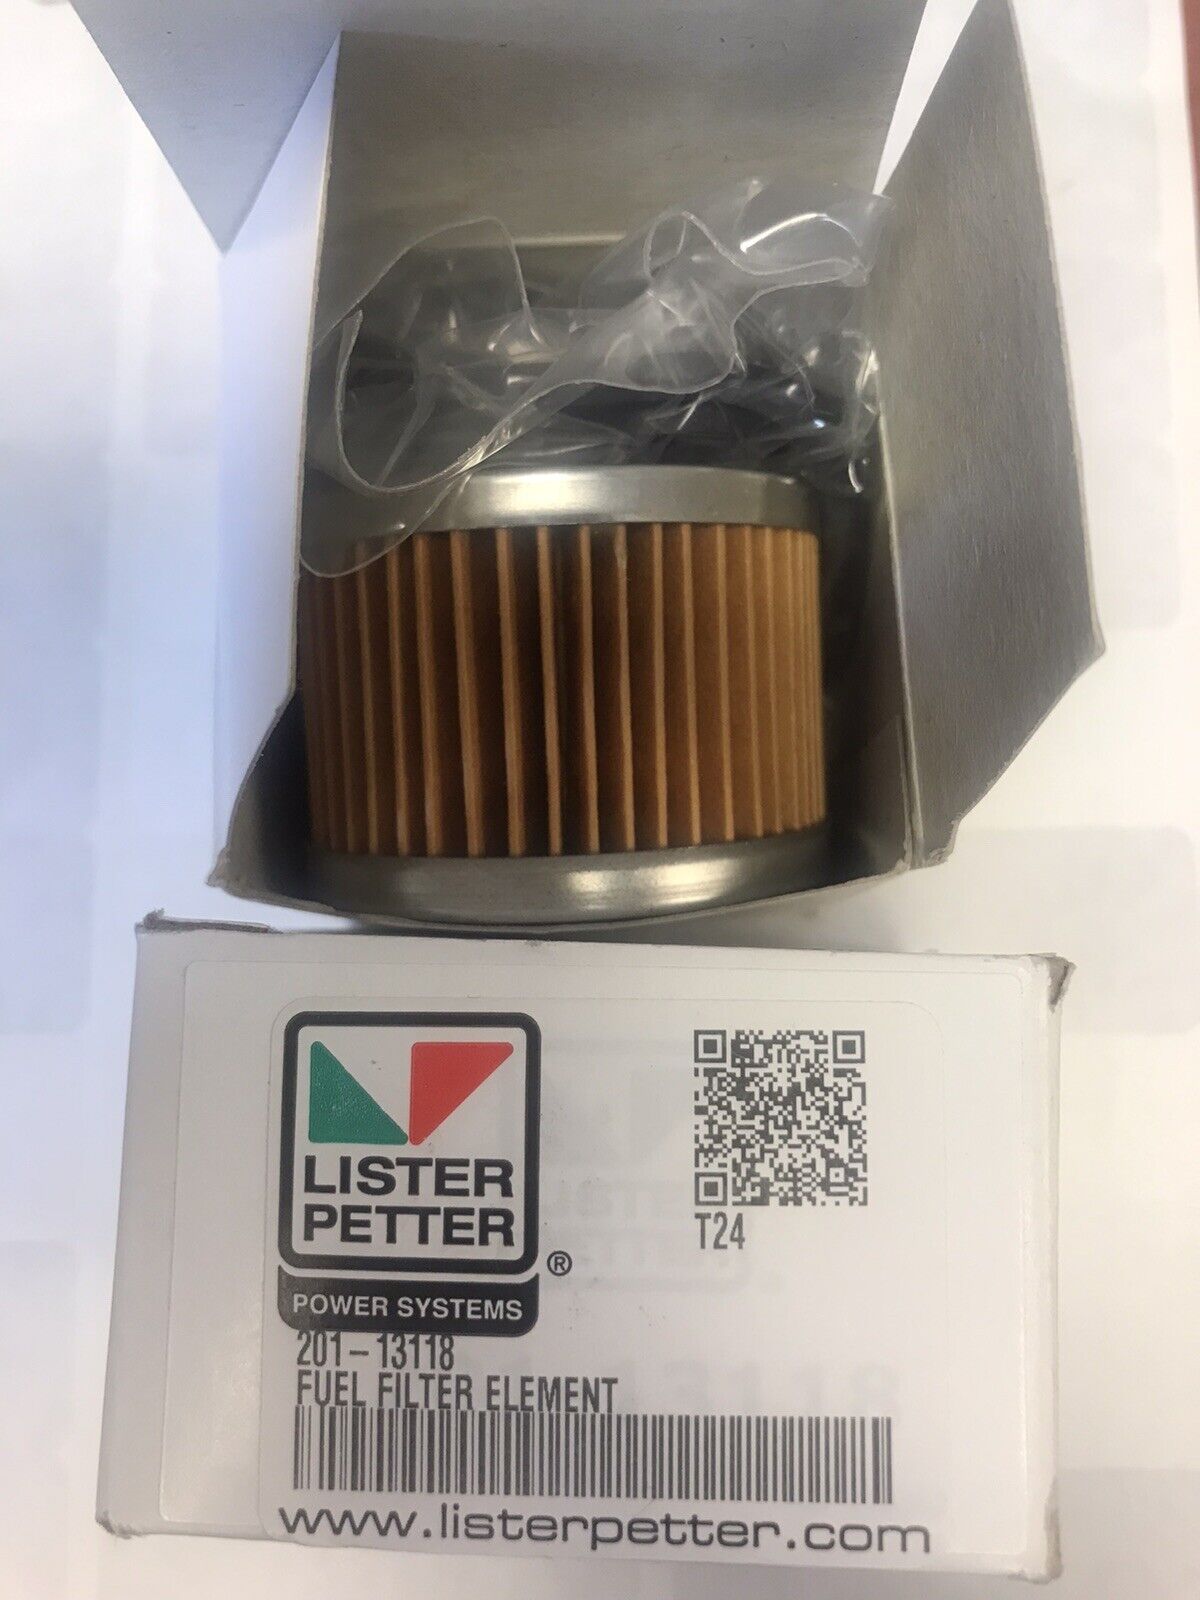 Lister Petter Fuel Filter Element Lt Lv Ts Tr Ac Ld Lr 201-13118 Small Engine